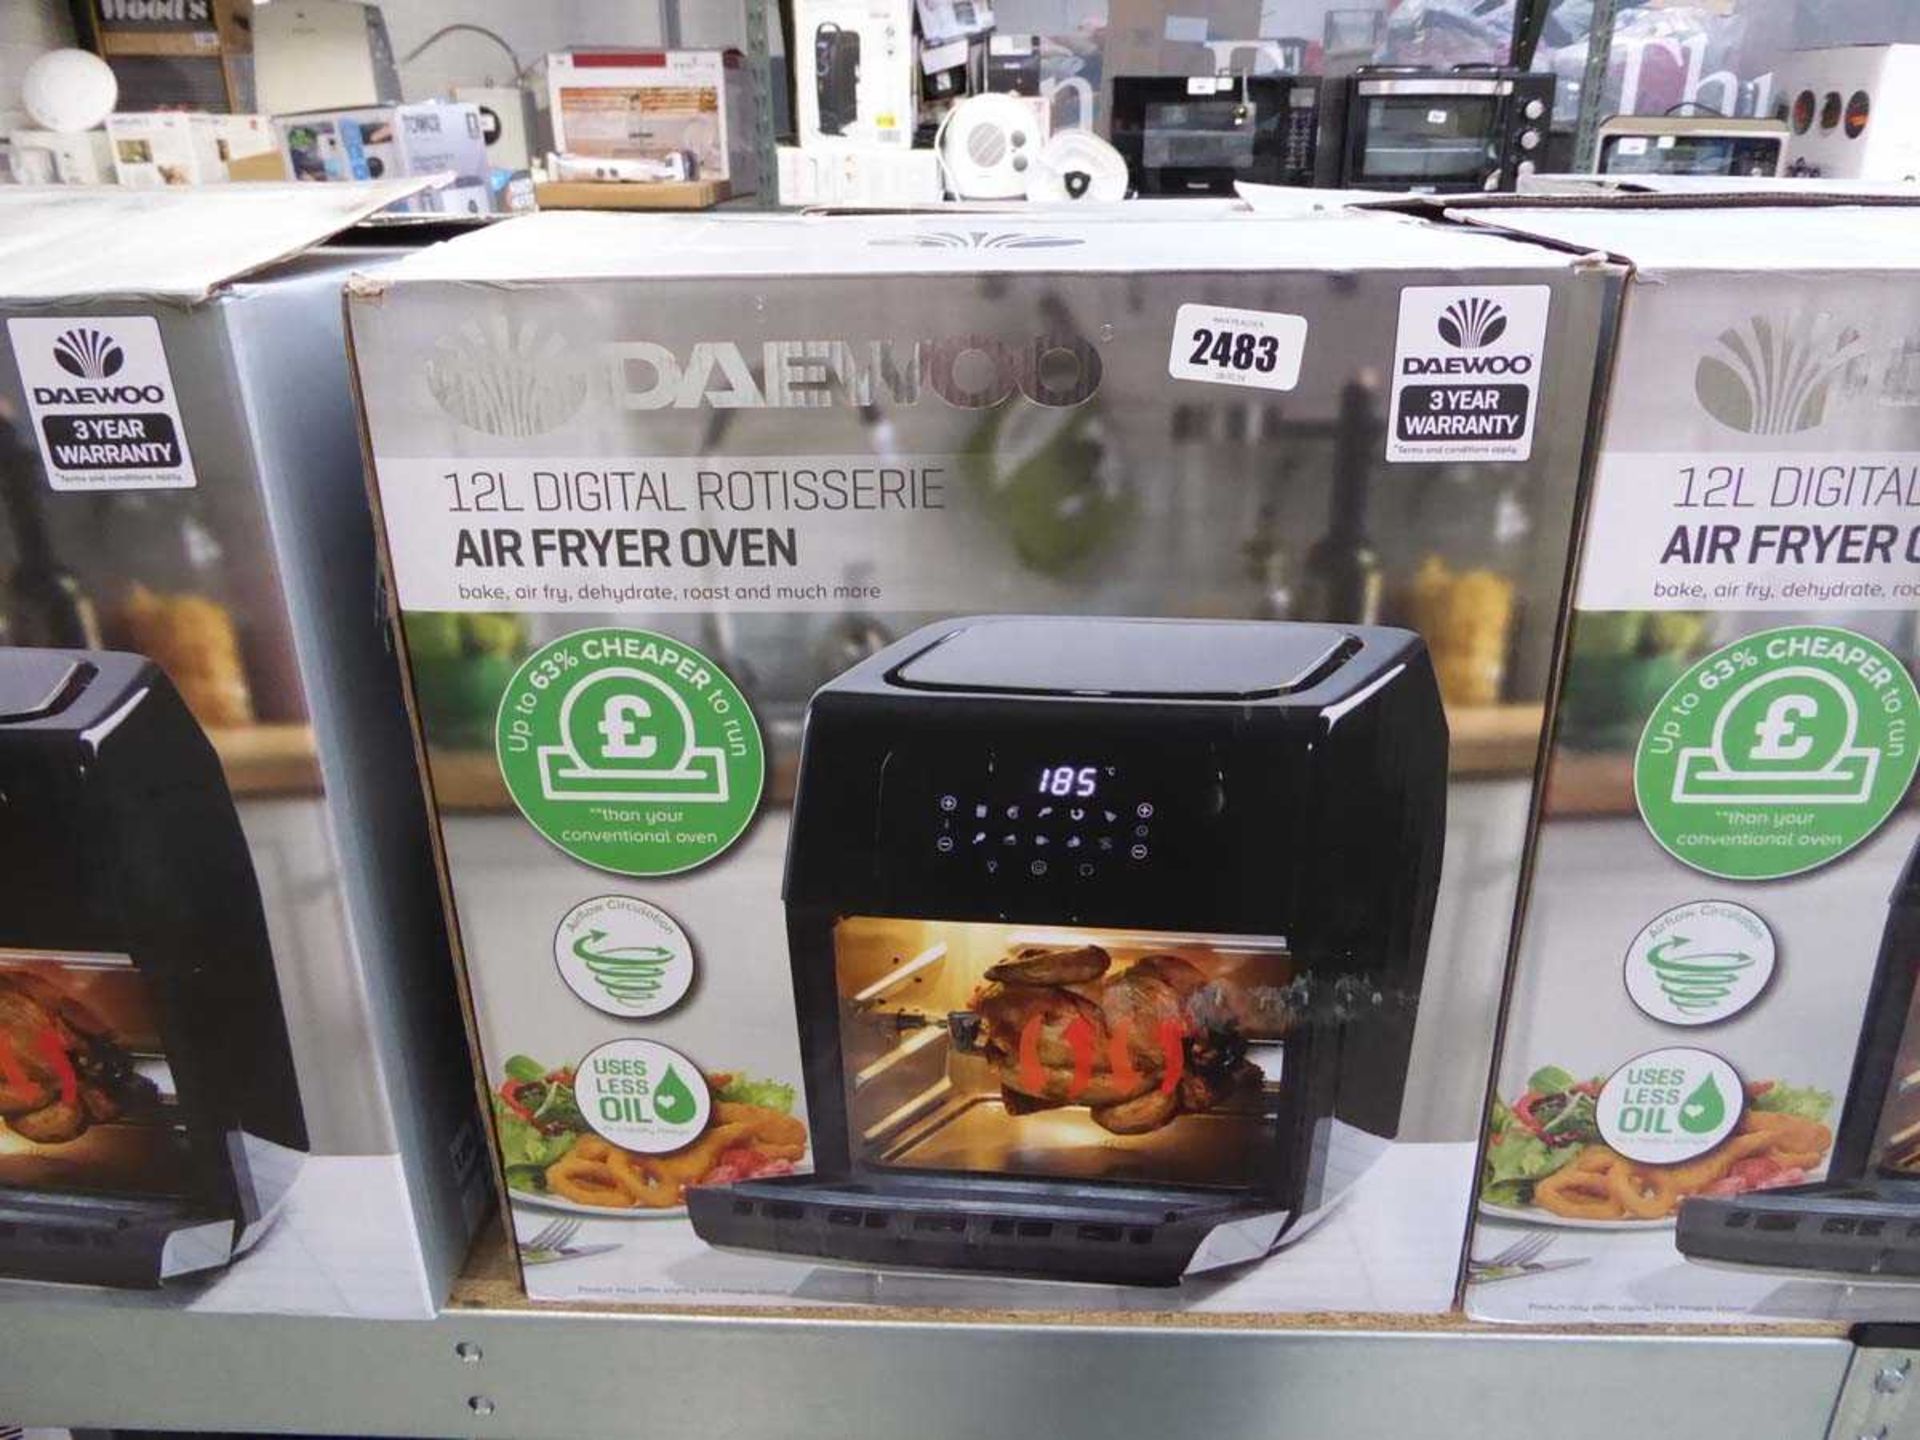 Boxed Daewoo 12L digital rotisserie air fryer oven